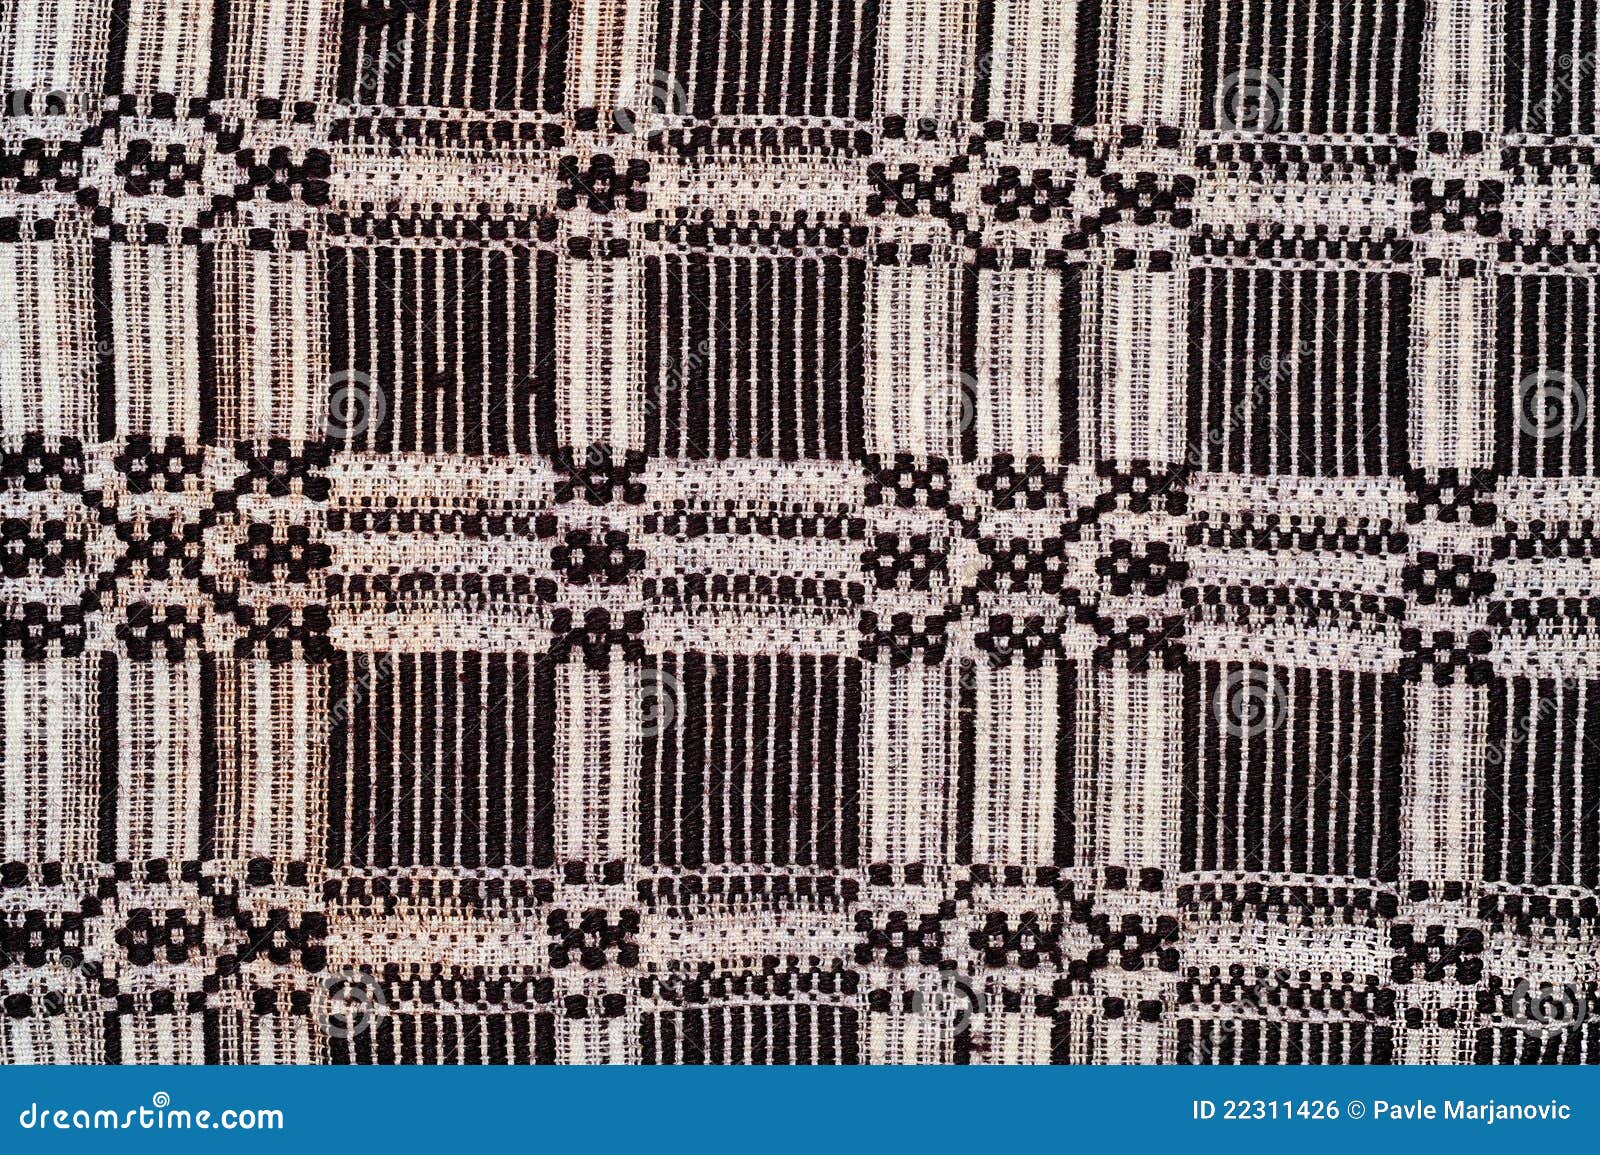 hand woven kilim pattern